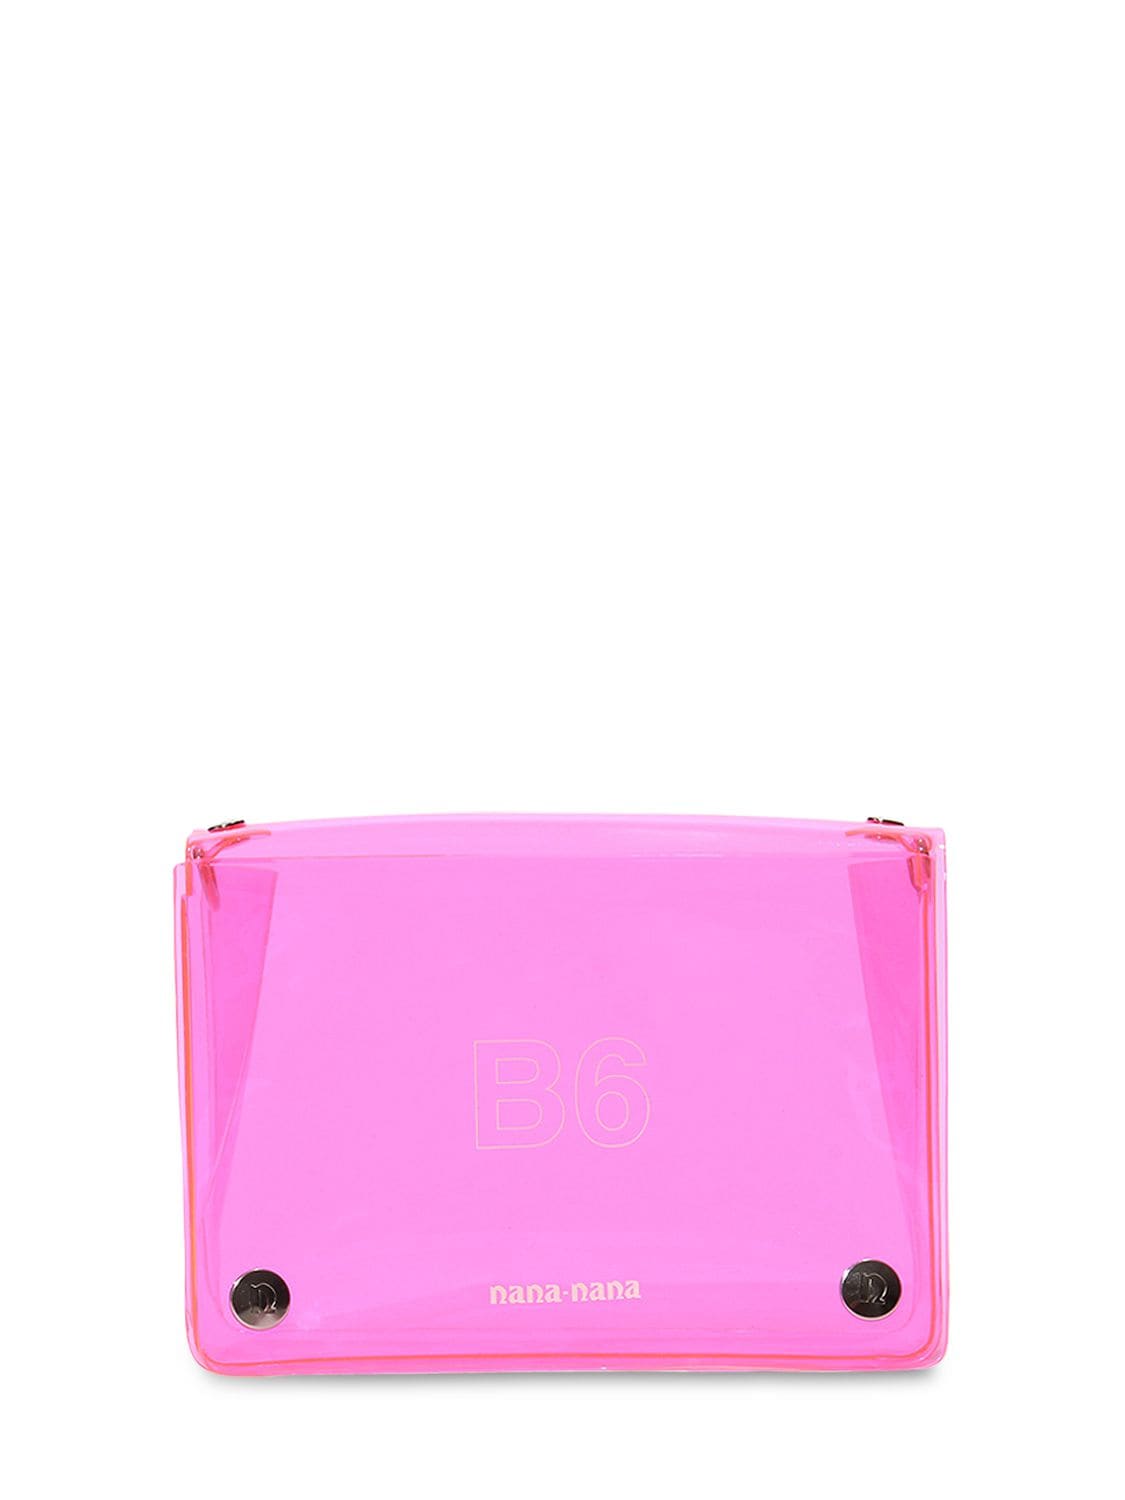 Nana-nana B6 Pvc Crossbody Bag In Neon Pink